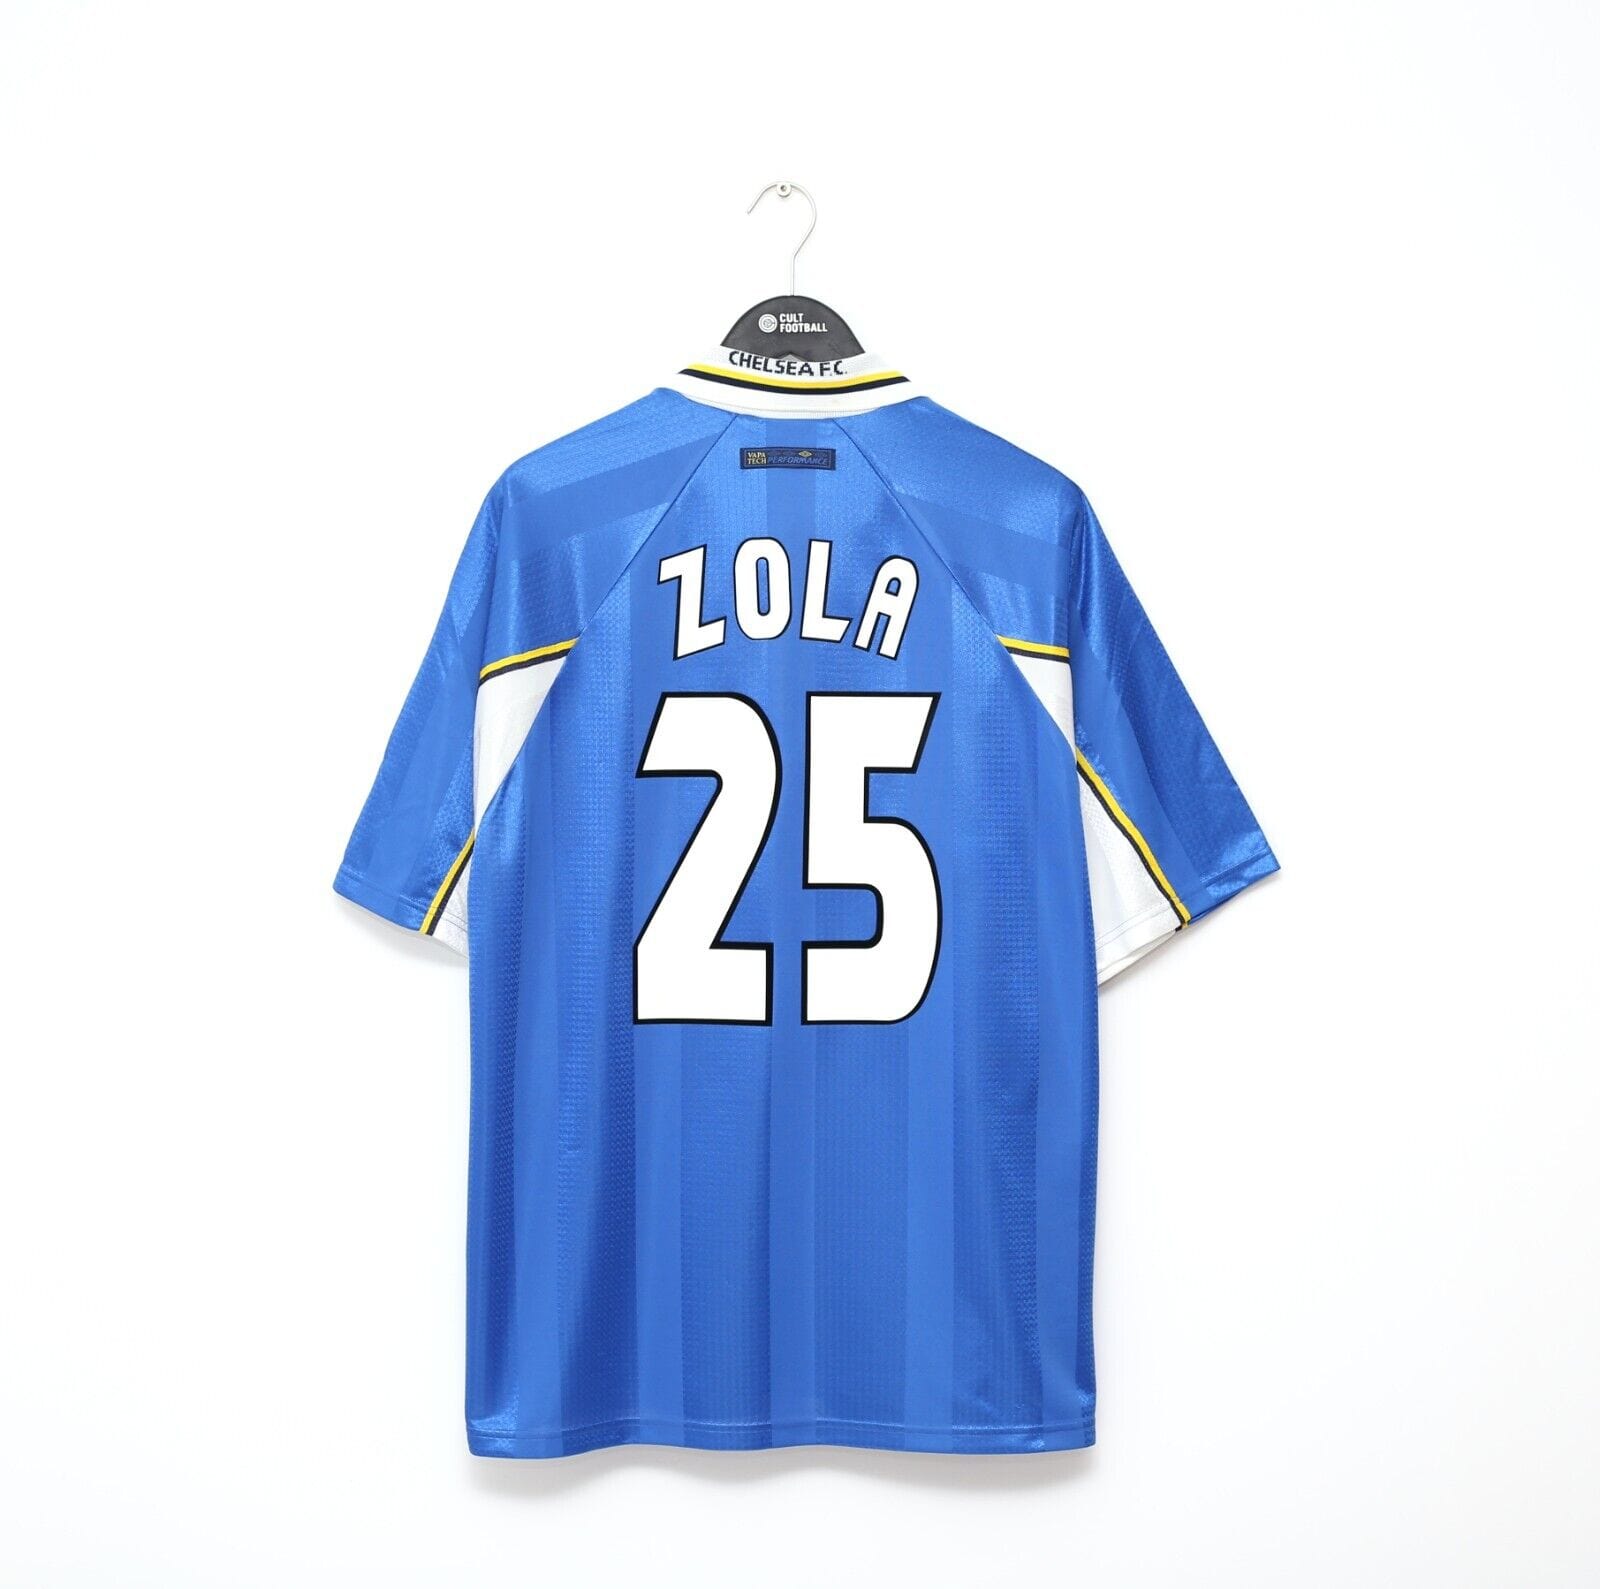 1997/99 ZOLA #25 Chelsea Vintage Umbro CUP WINNERS CUP FINAL Football Shirt (XL)